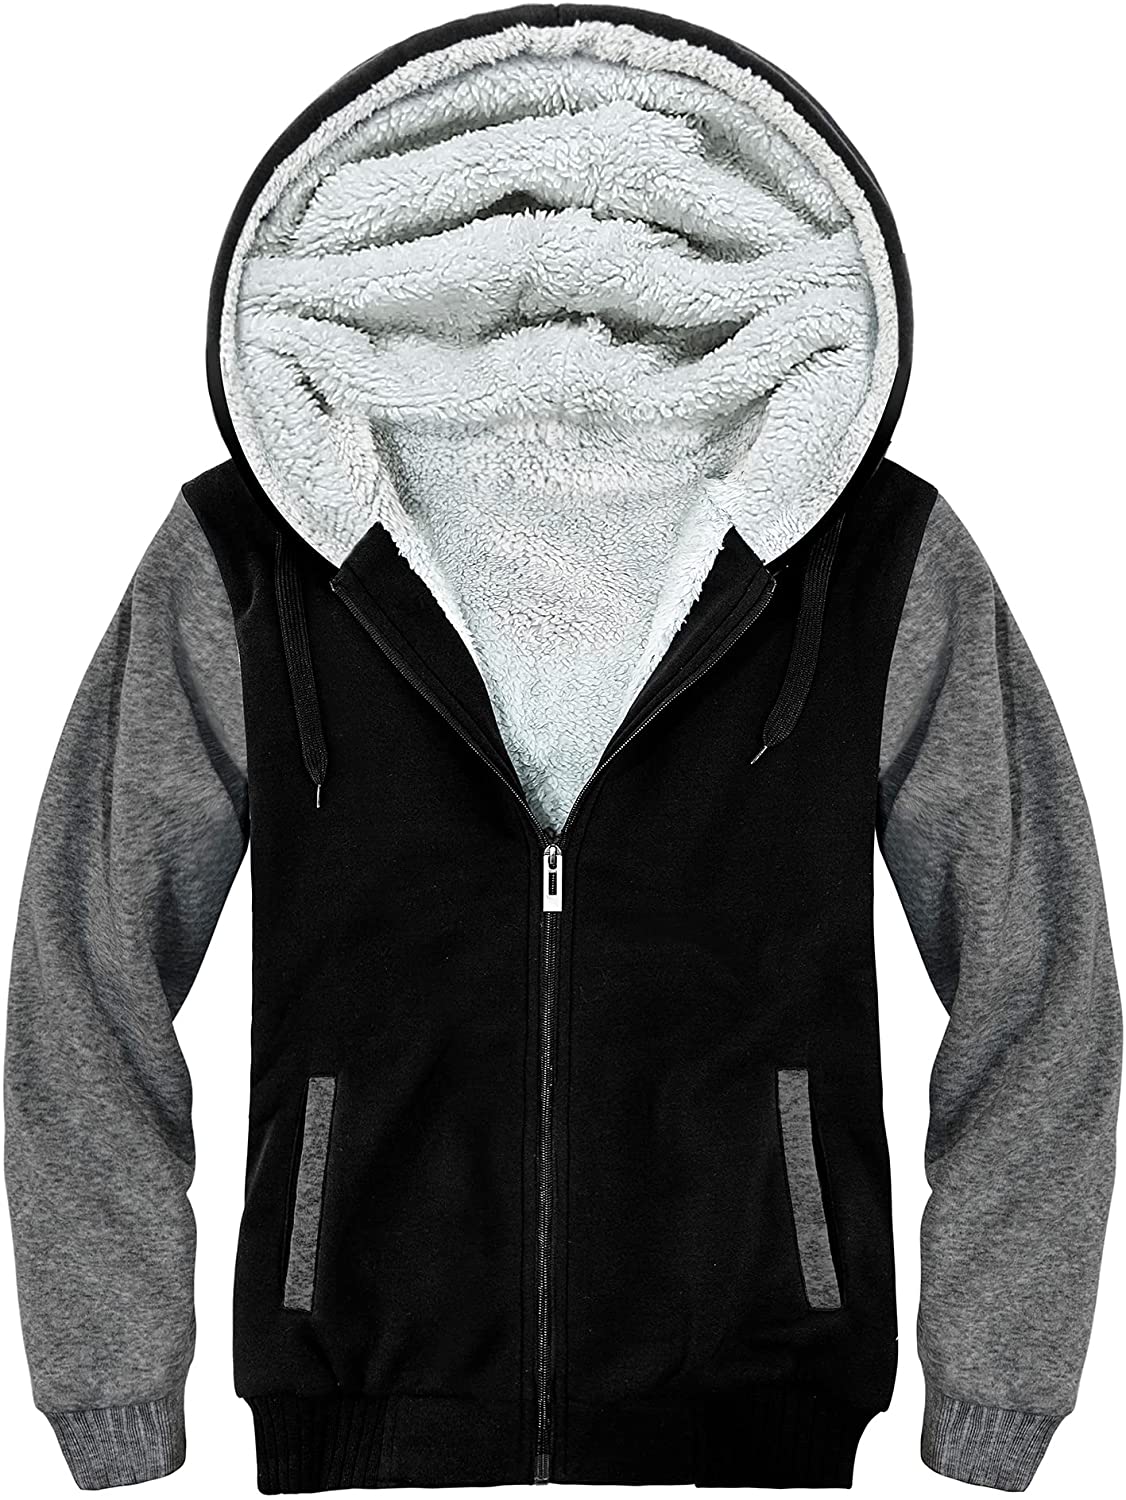 Geek Lighting Men's Hoodies Fully Sherpa Lined Zip Up Sweatshirts Heavy Thick Fleece Jacket Warm Winter Workout Pullover 